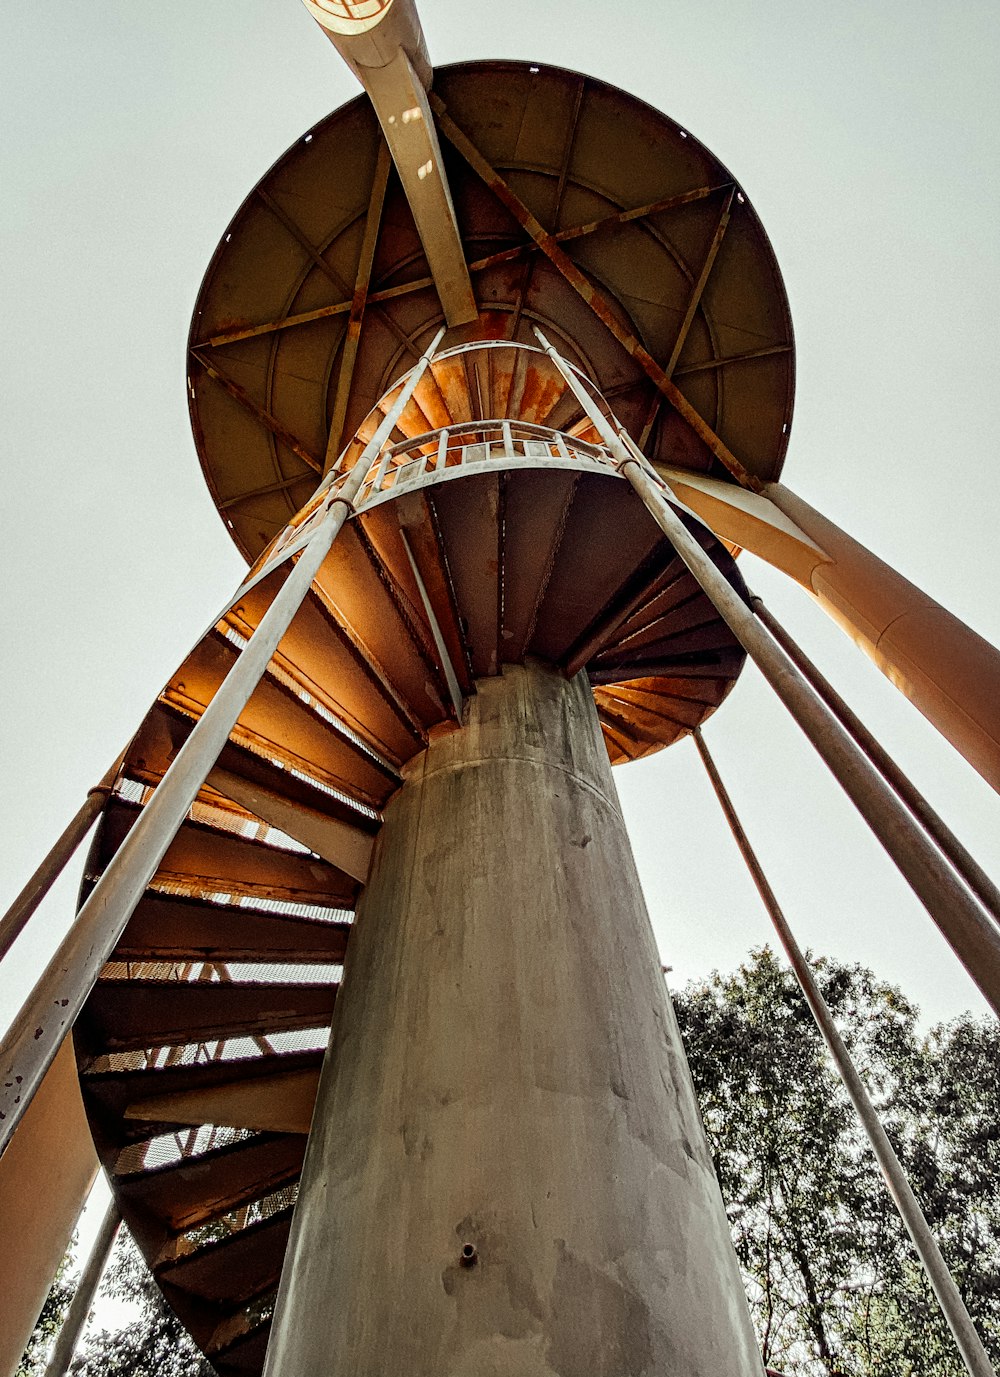 brown wooden spiral staircase under blue sky during daytime